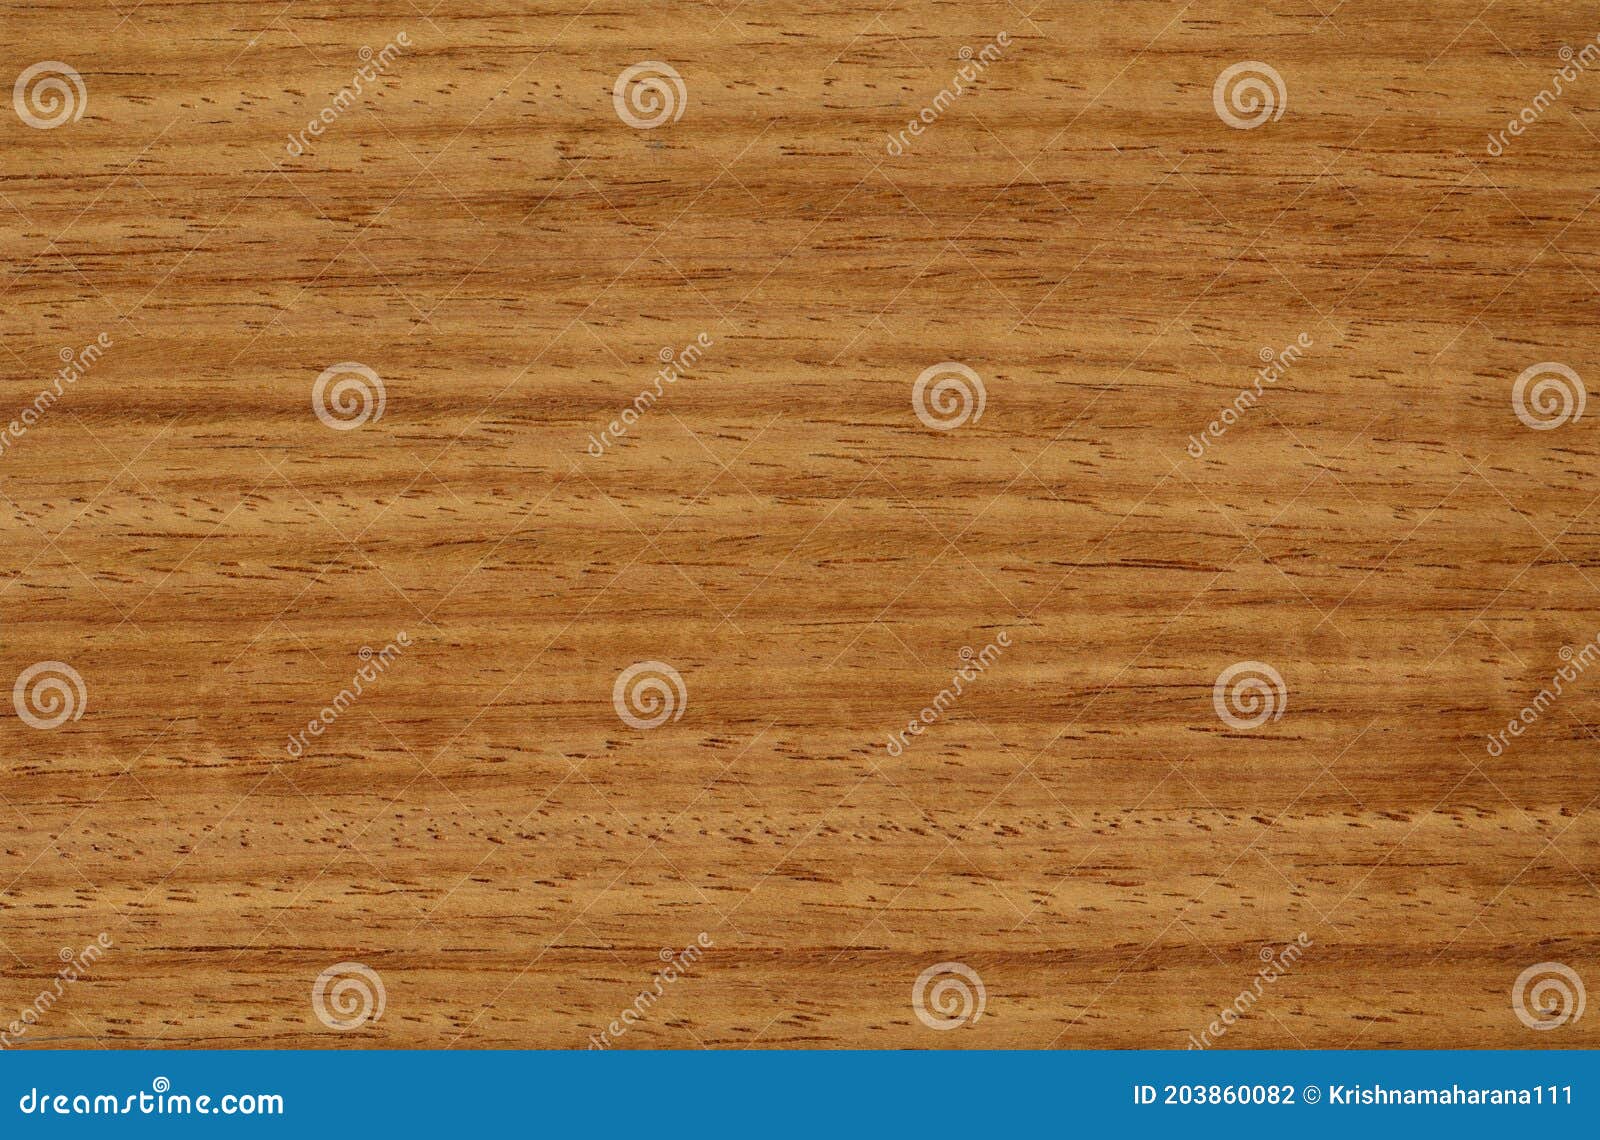 natural burma teak wood veneer surface for interior and exterior manufacturers use